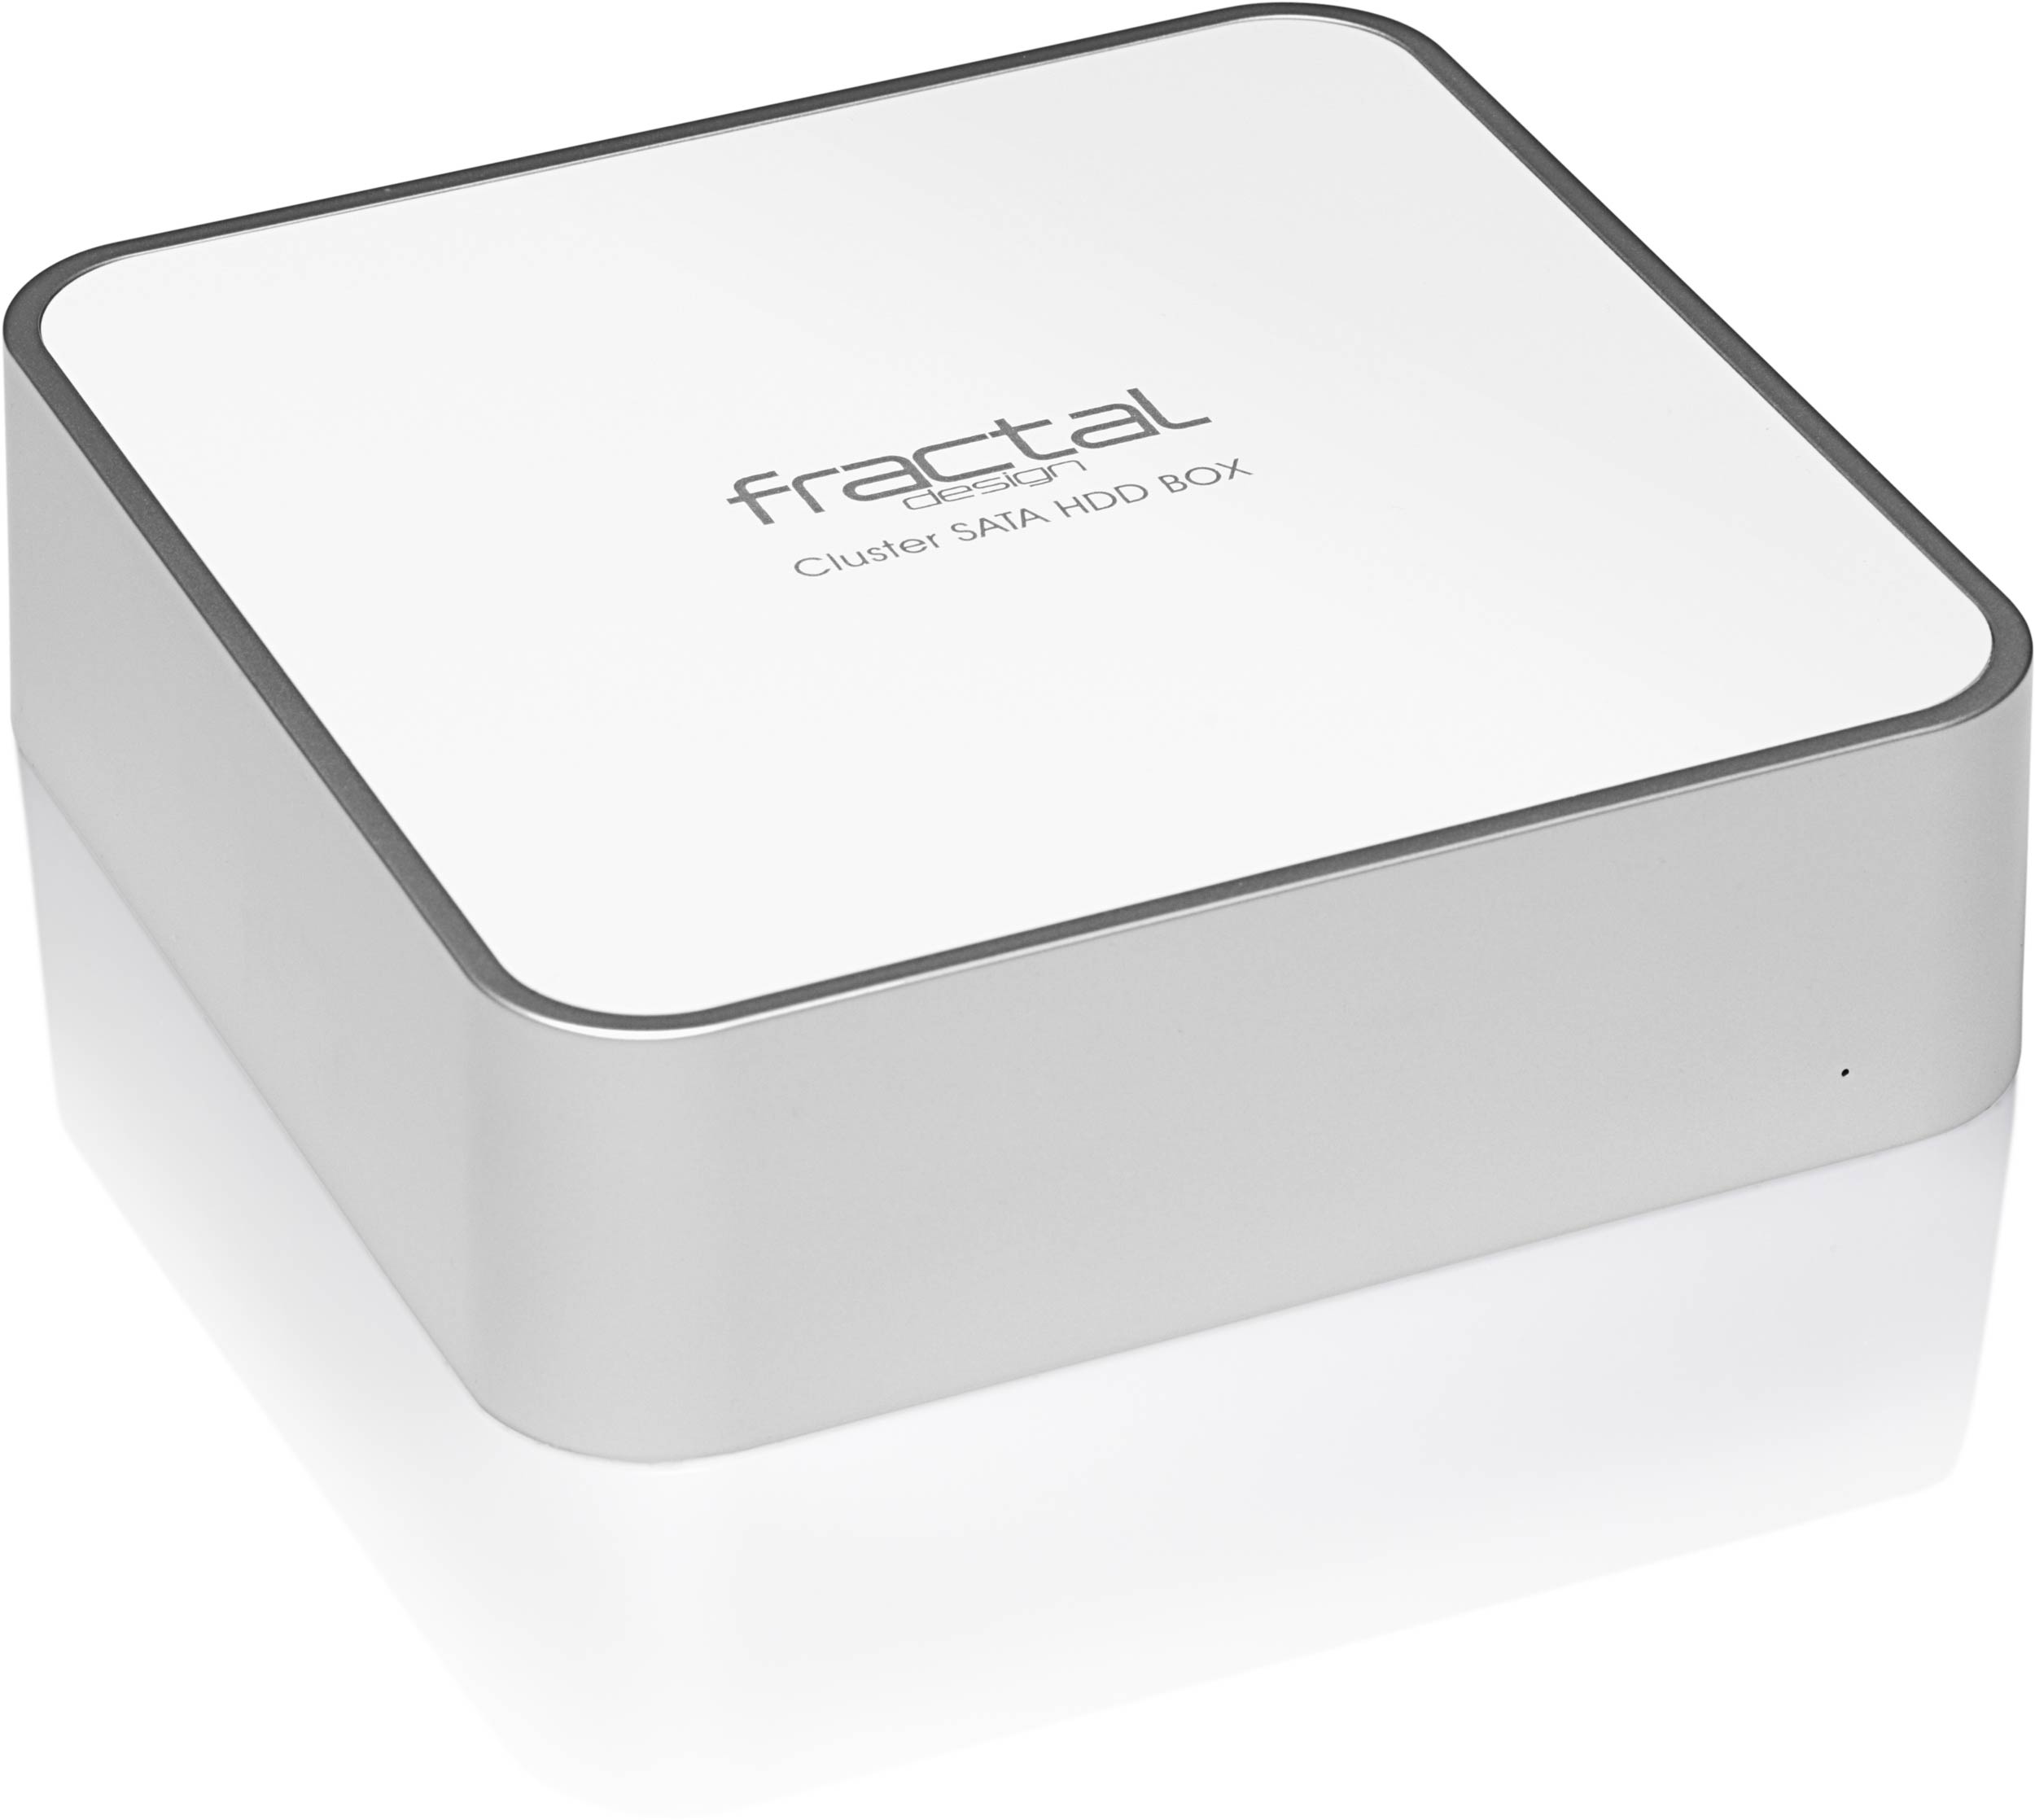 Forfølge føle Sløset Cluster Box E-SATA/USB External HDD Enclosure